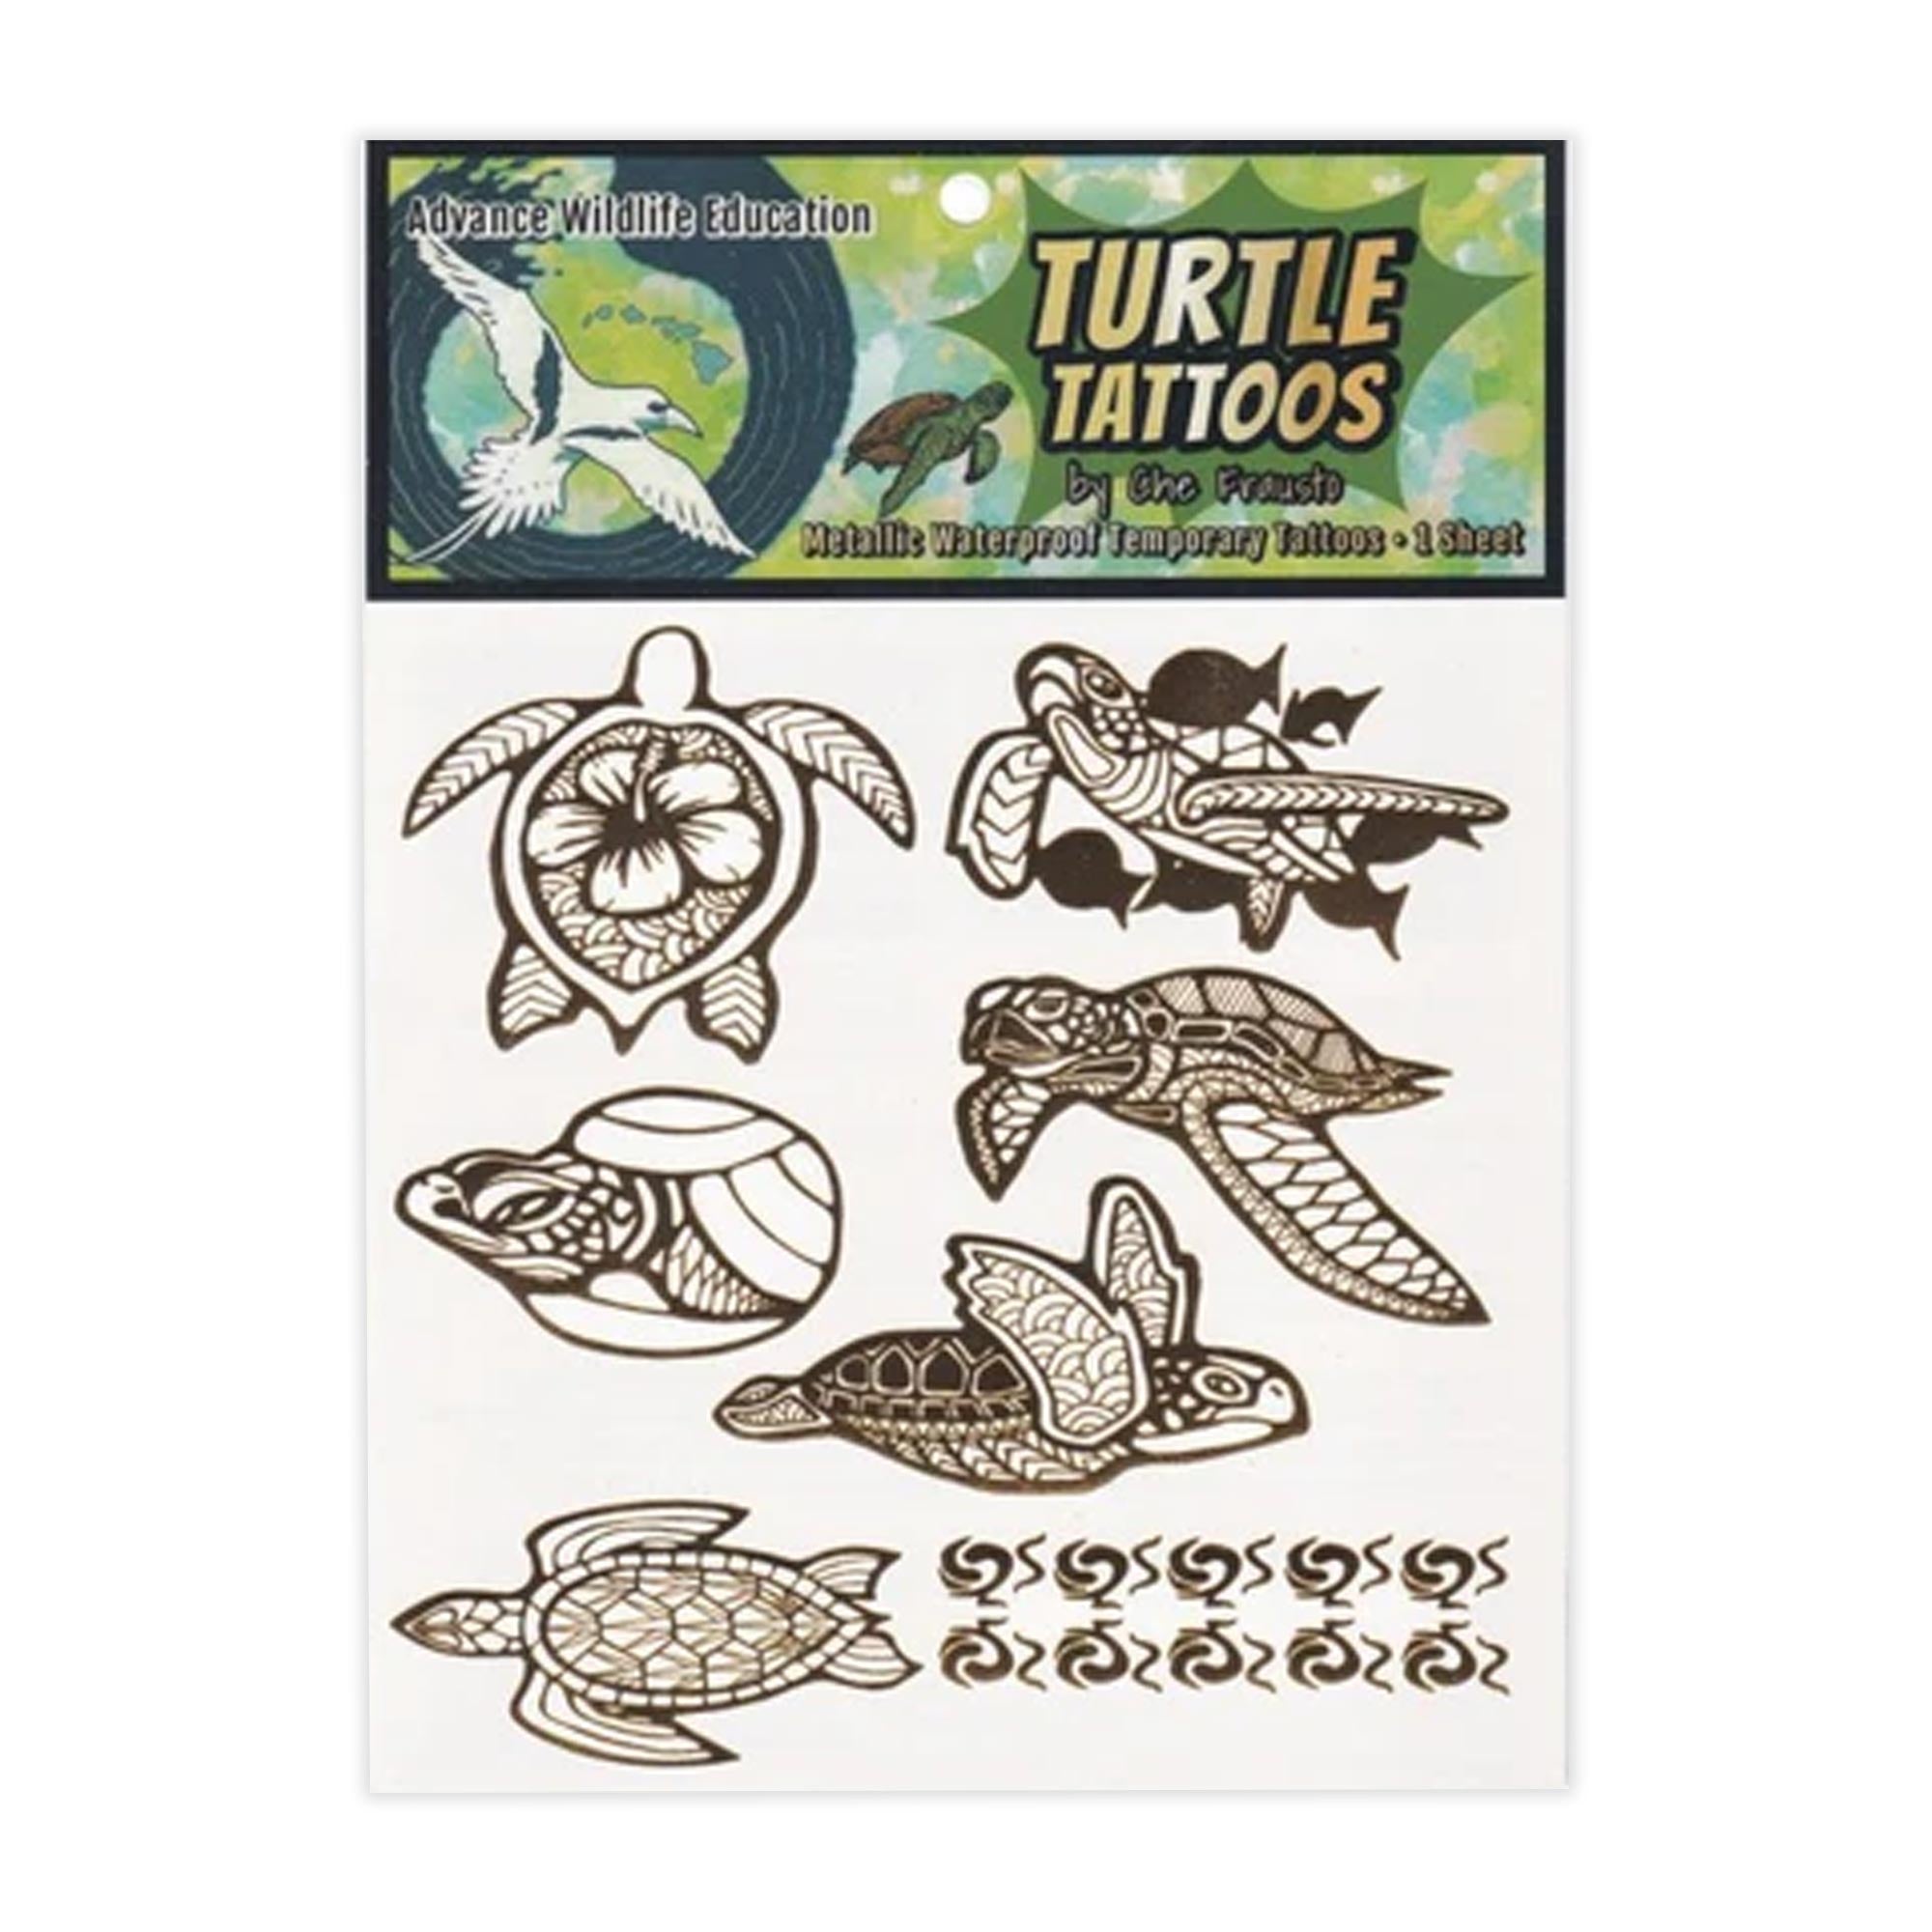 3 Turtles (Mother and daughters) 3 turtles hammerhead shark original Polynesian  tattoo design